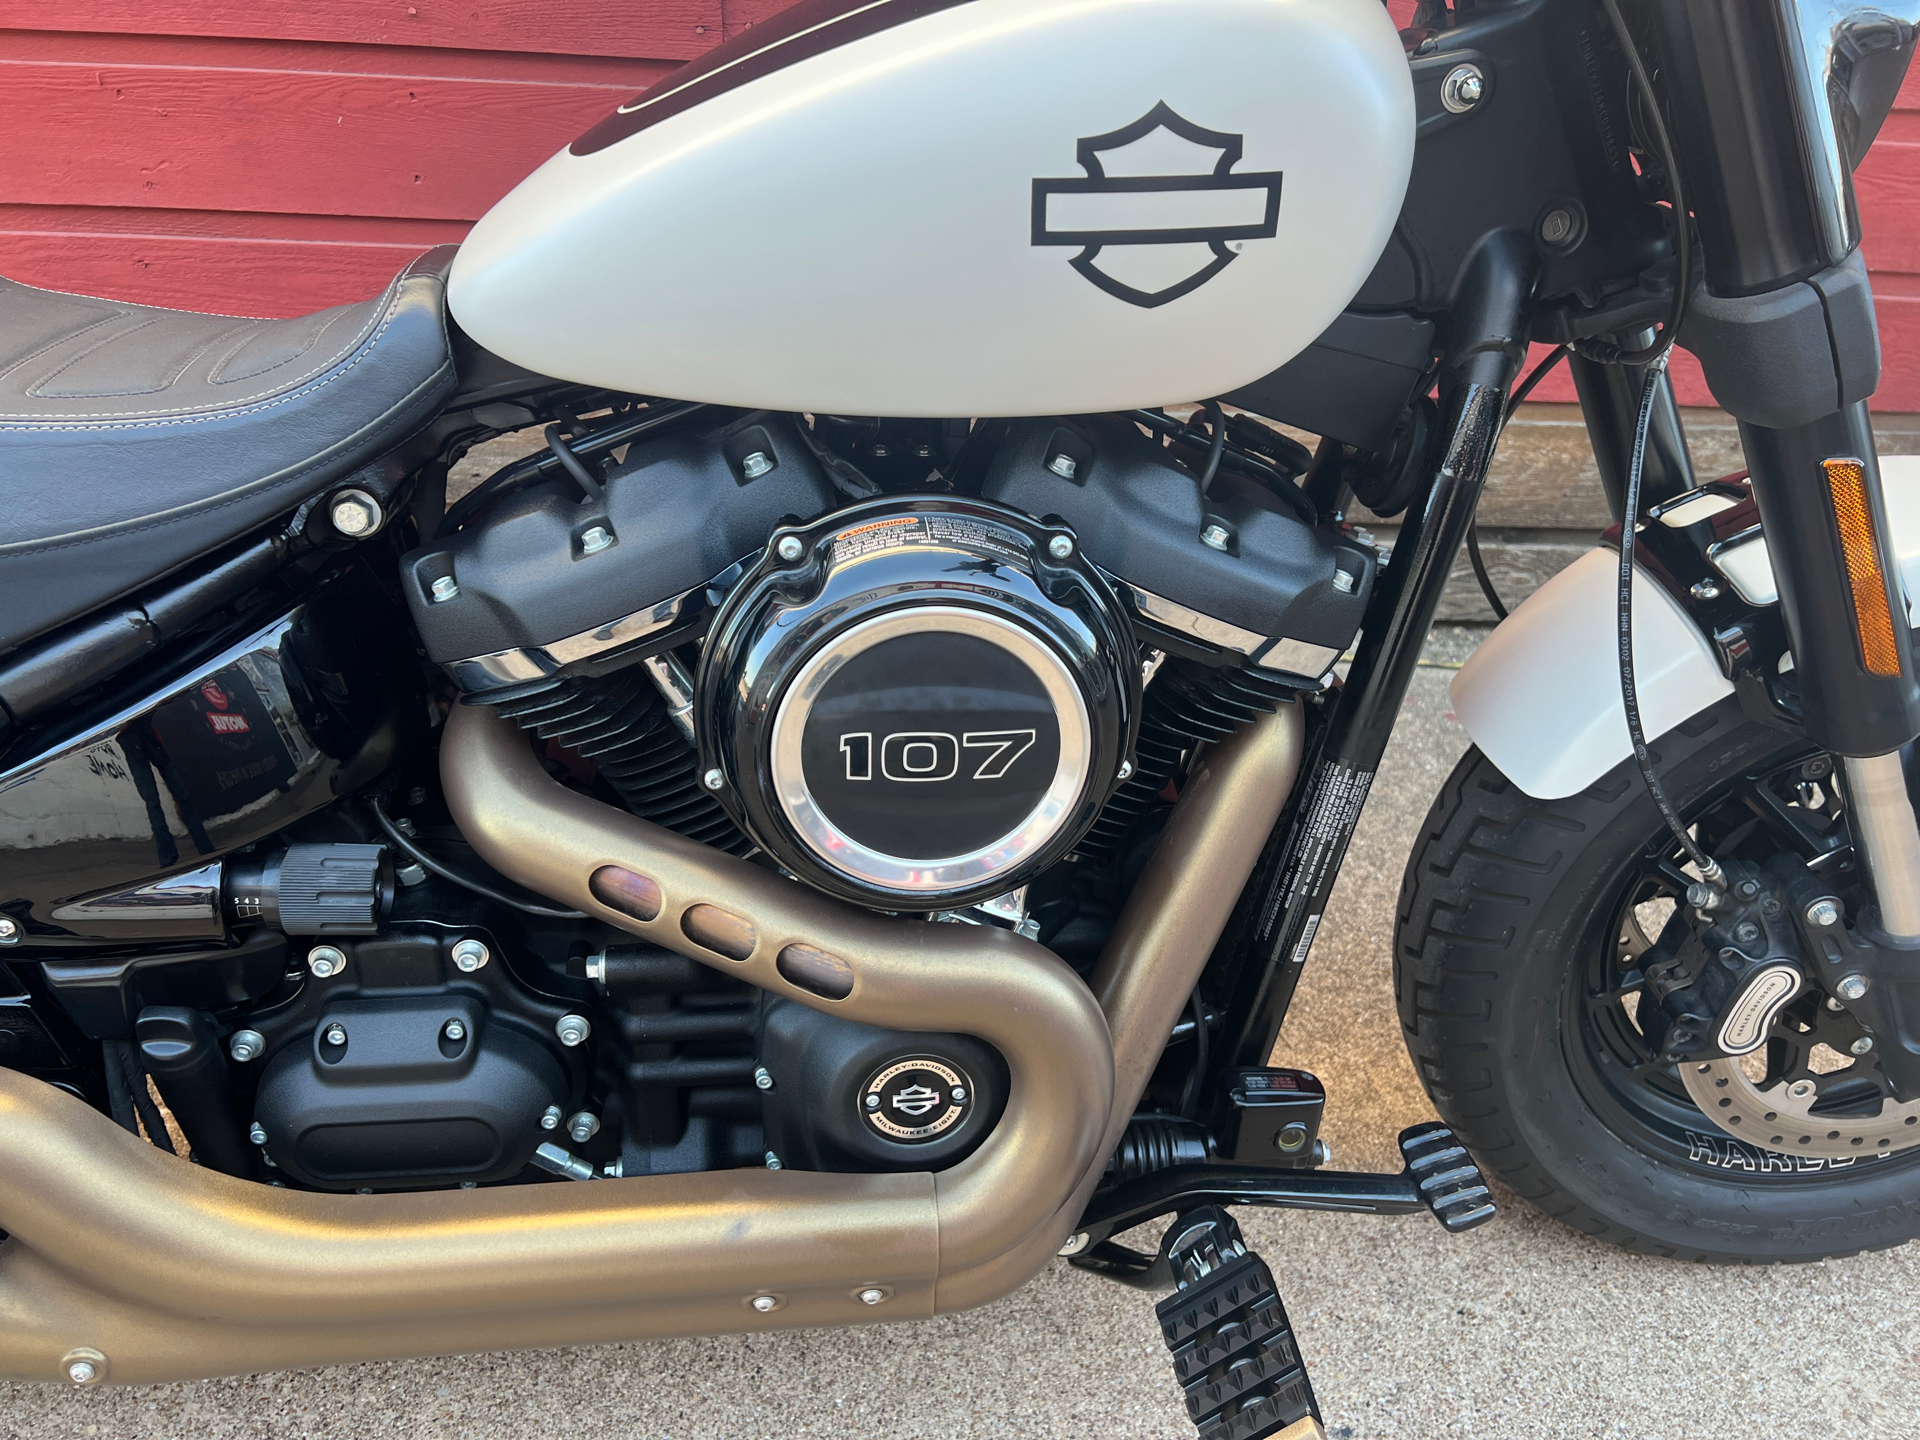 2019 Harley-Davidson Fat Bob® 107 in Dallas, Texas - Photo 4